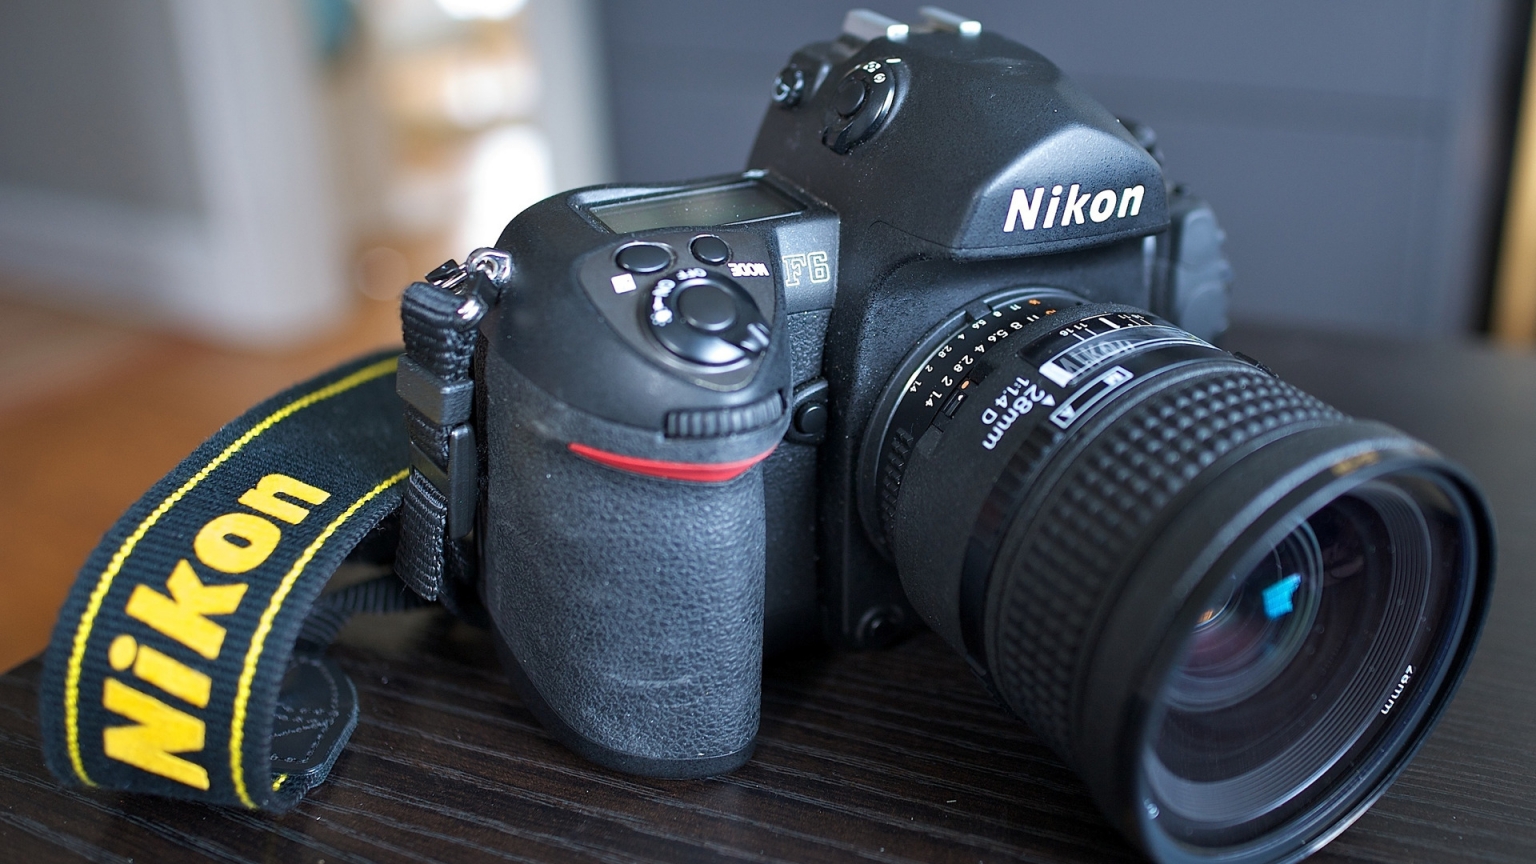 Nikon F6 for 1536 x 864 HDTV resolution